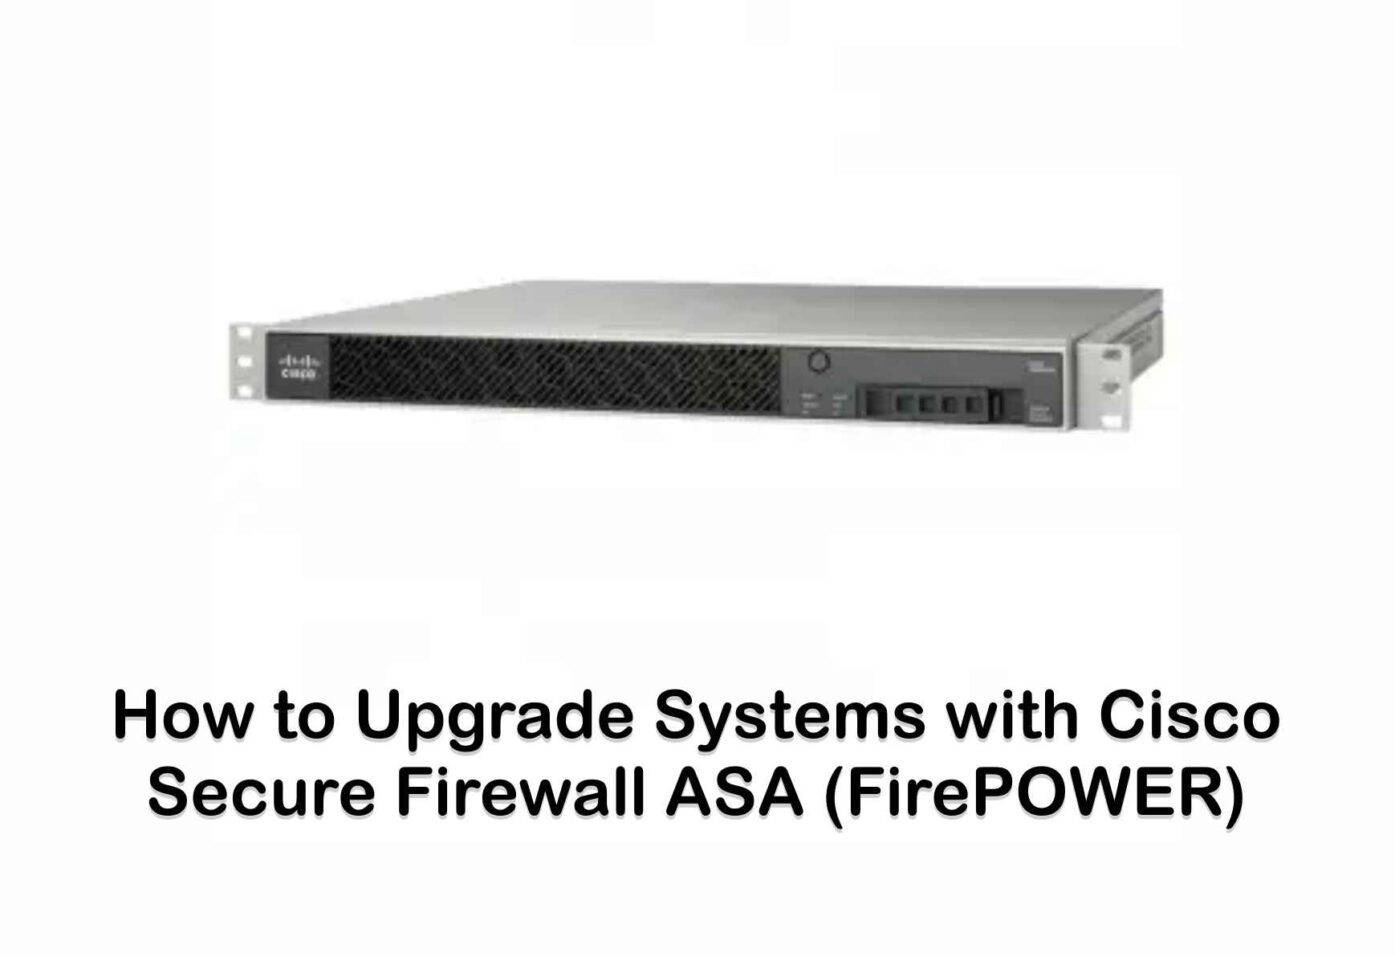 Cisco Secure Firewall ASA